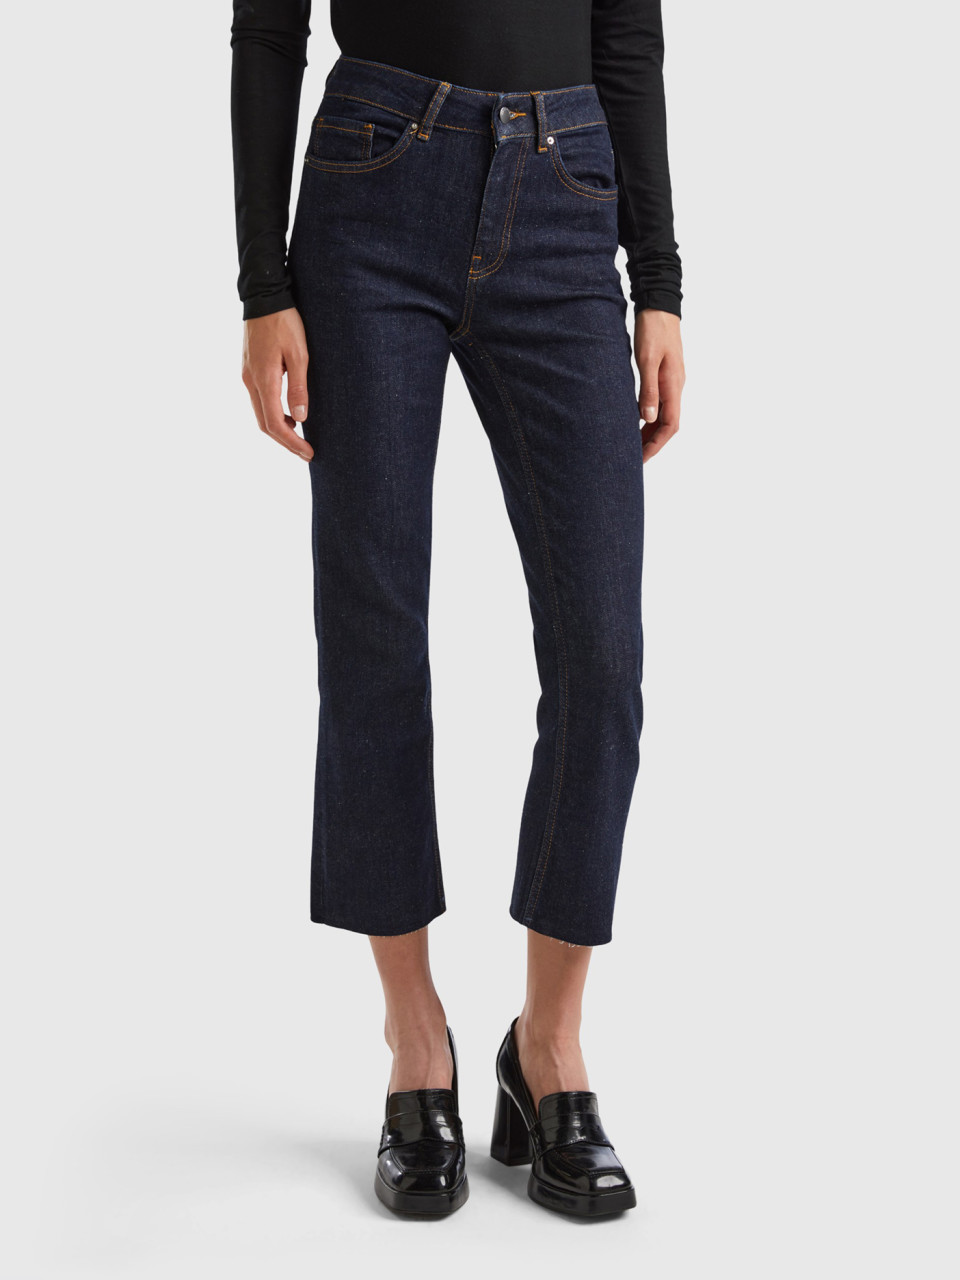 Benetton, Five-pocket-jeans Mit Cropped-länge, Dunkelblau, female